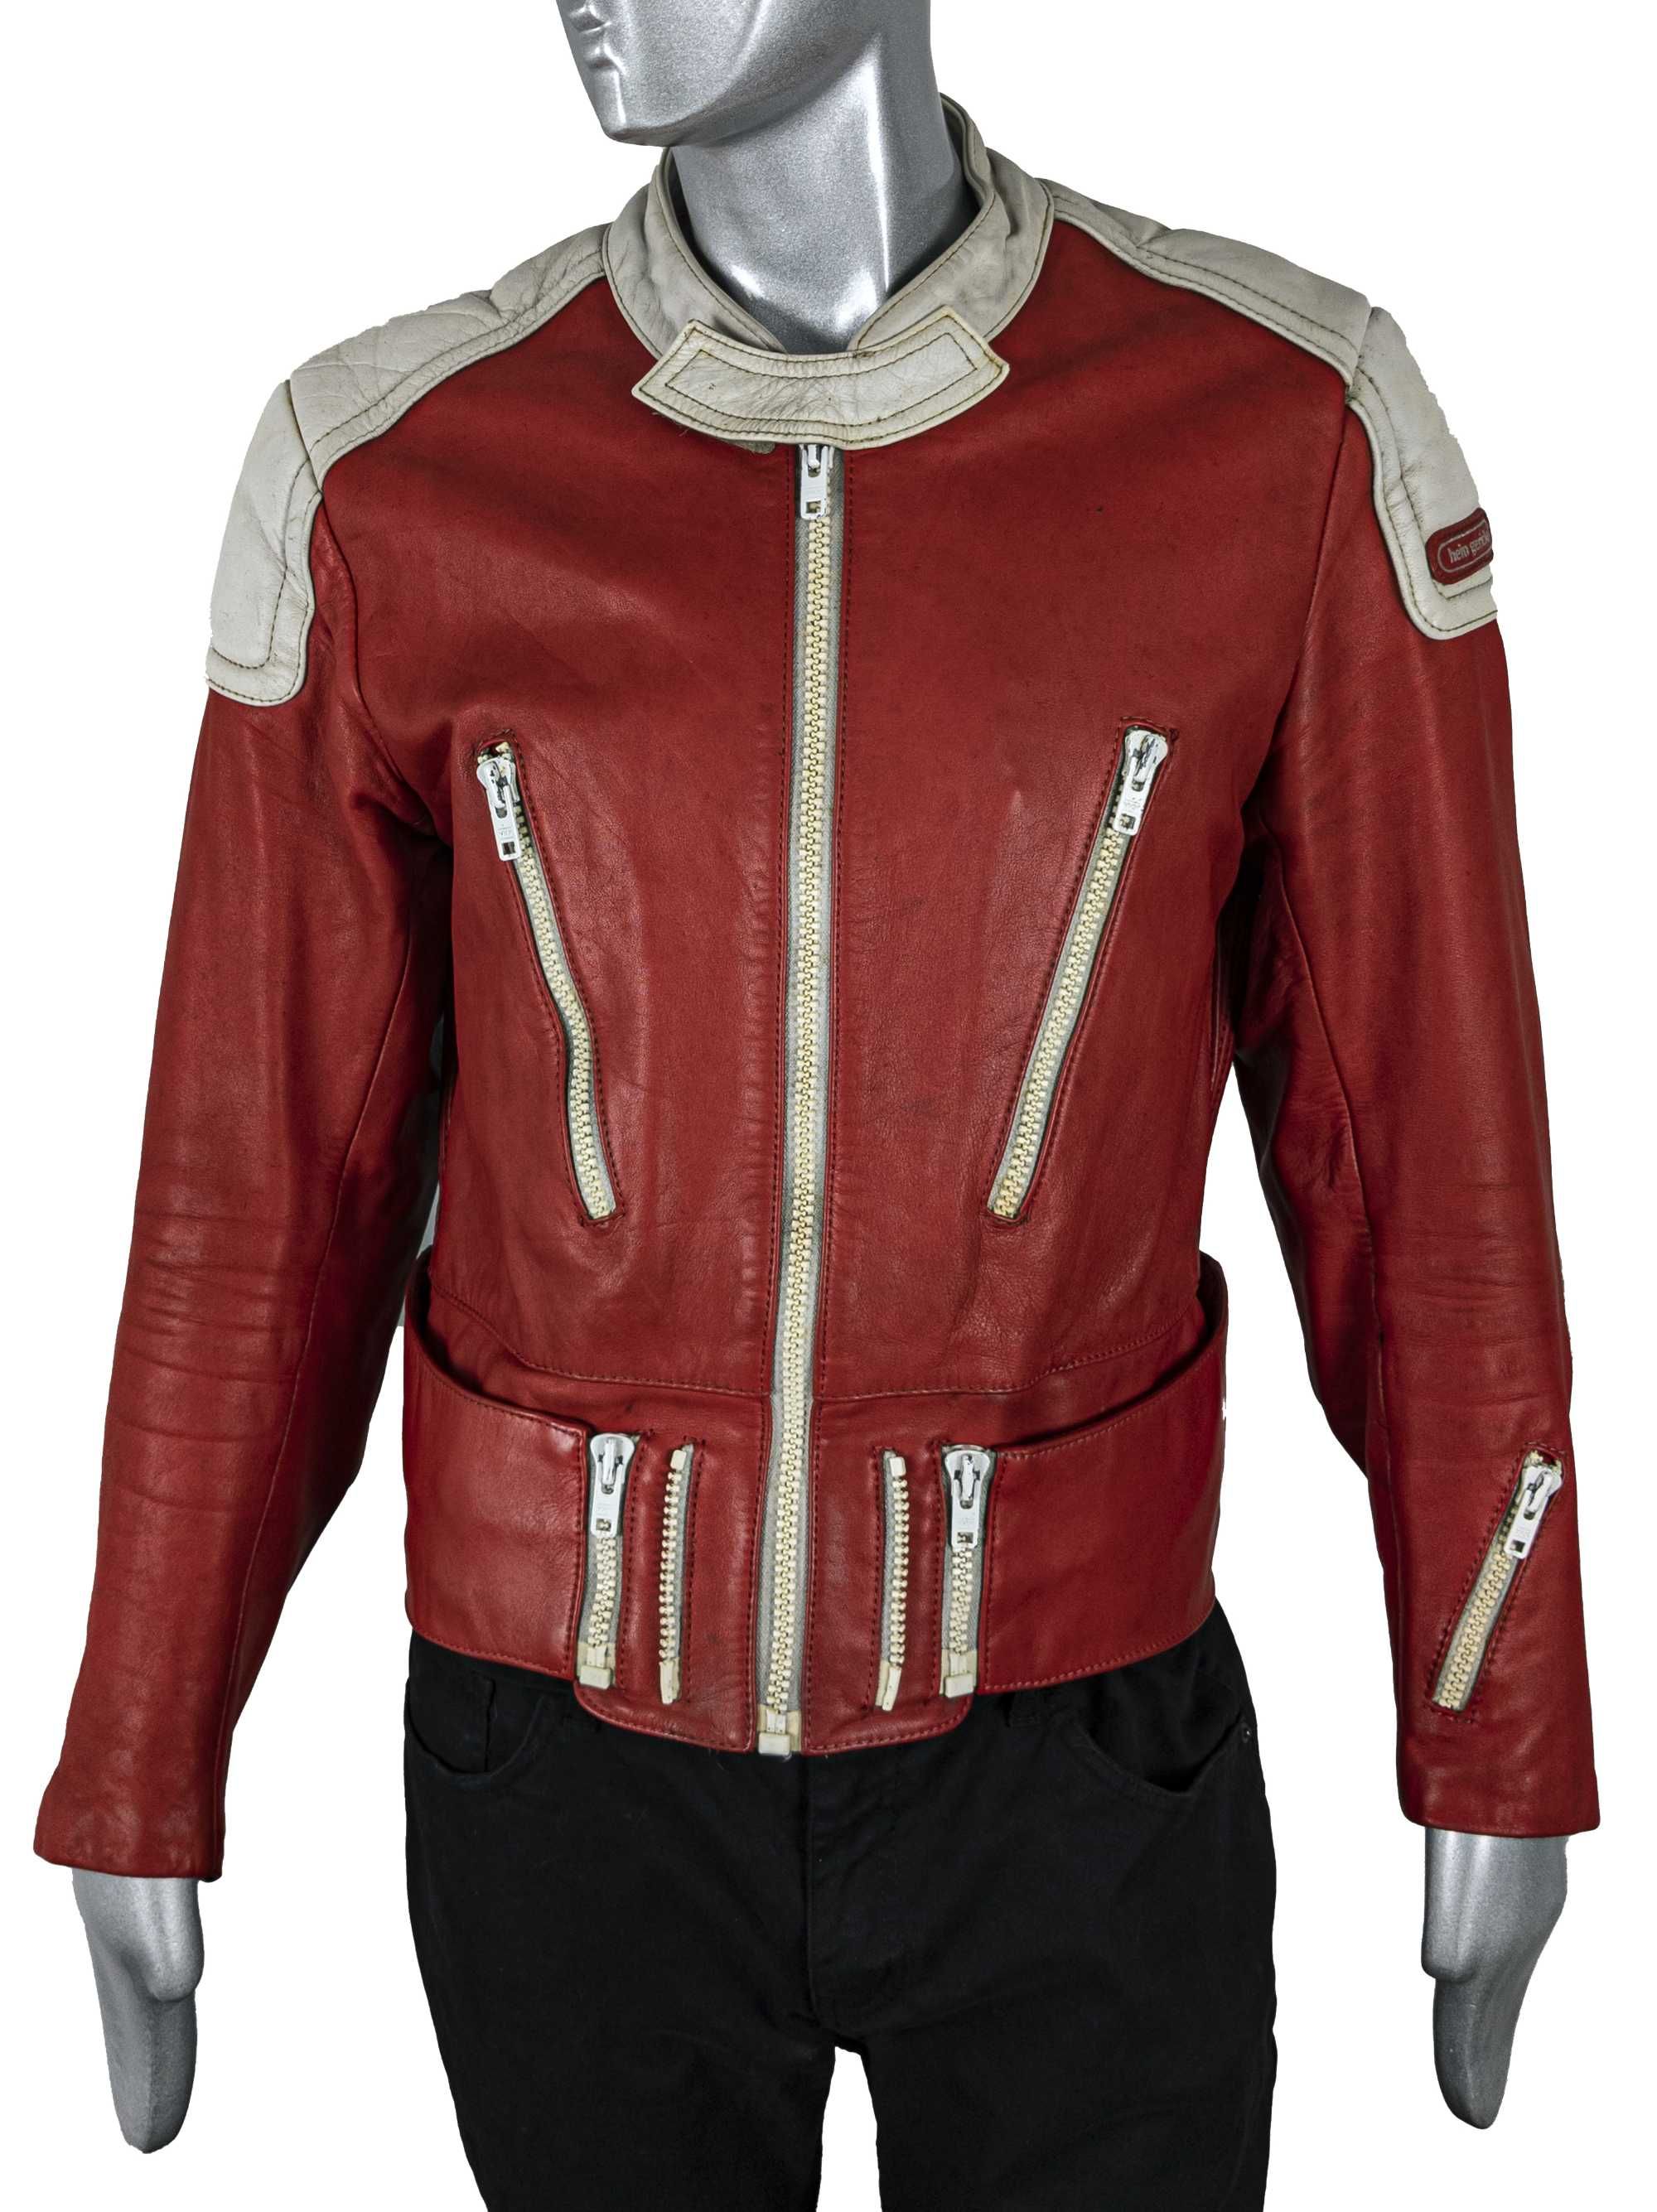 Hein gericke винтажная вишневая байкерская куртка 1980-х годов